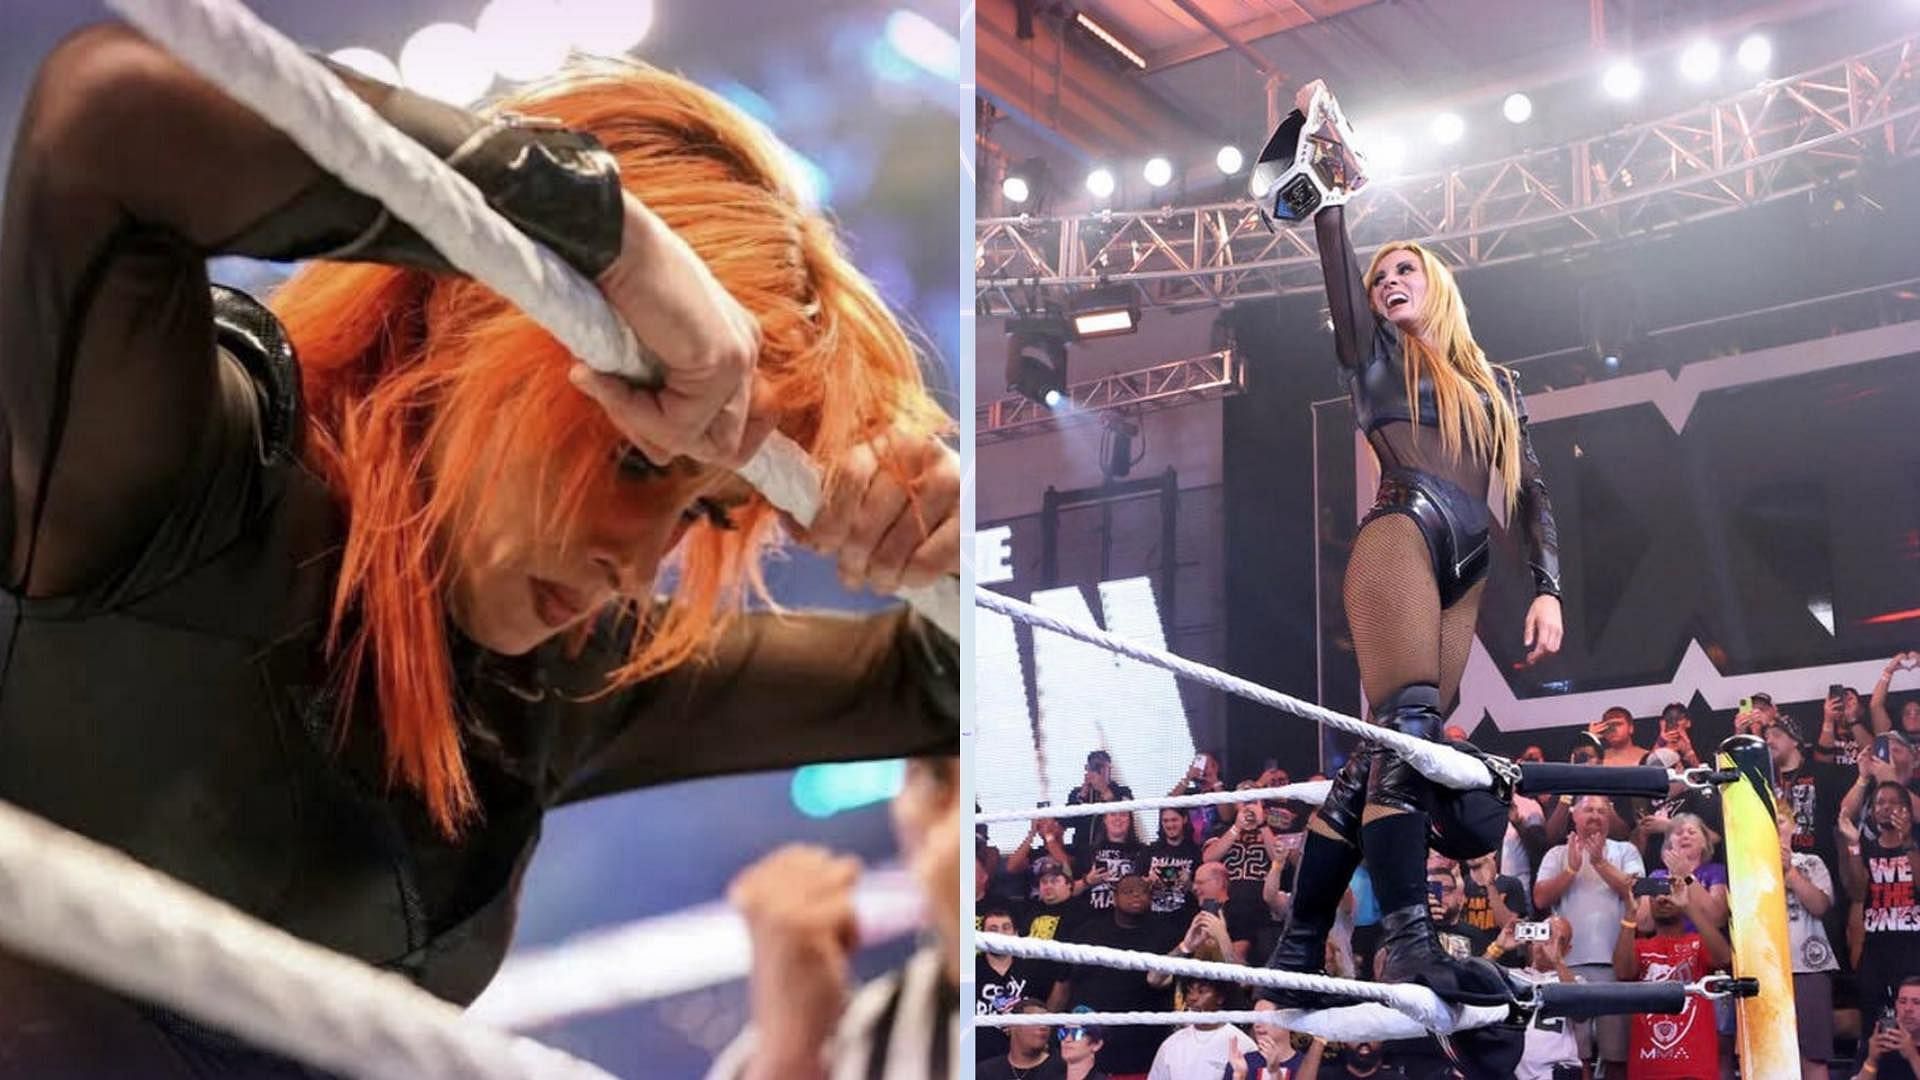 Becky Lynch Confirms Her NXT Future After Women's Title Loss